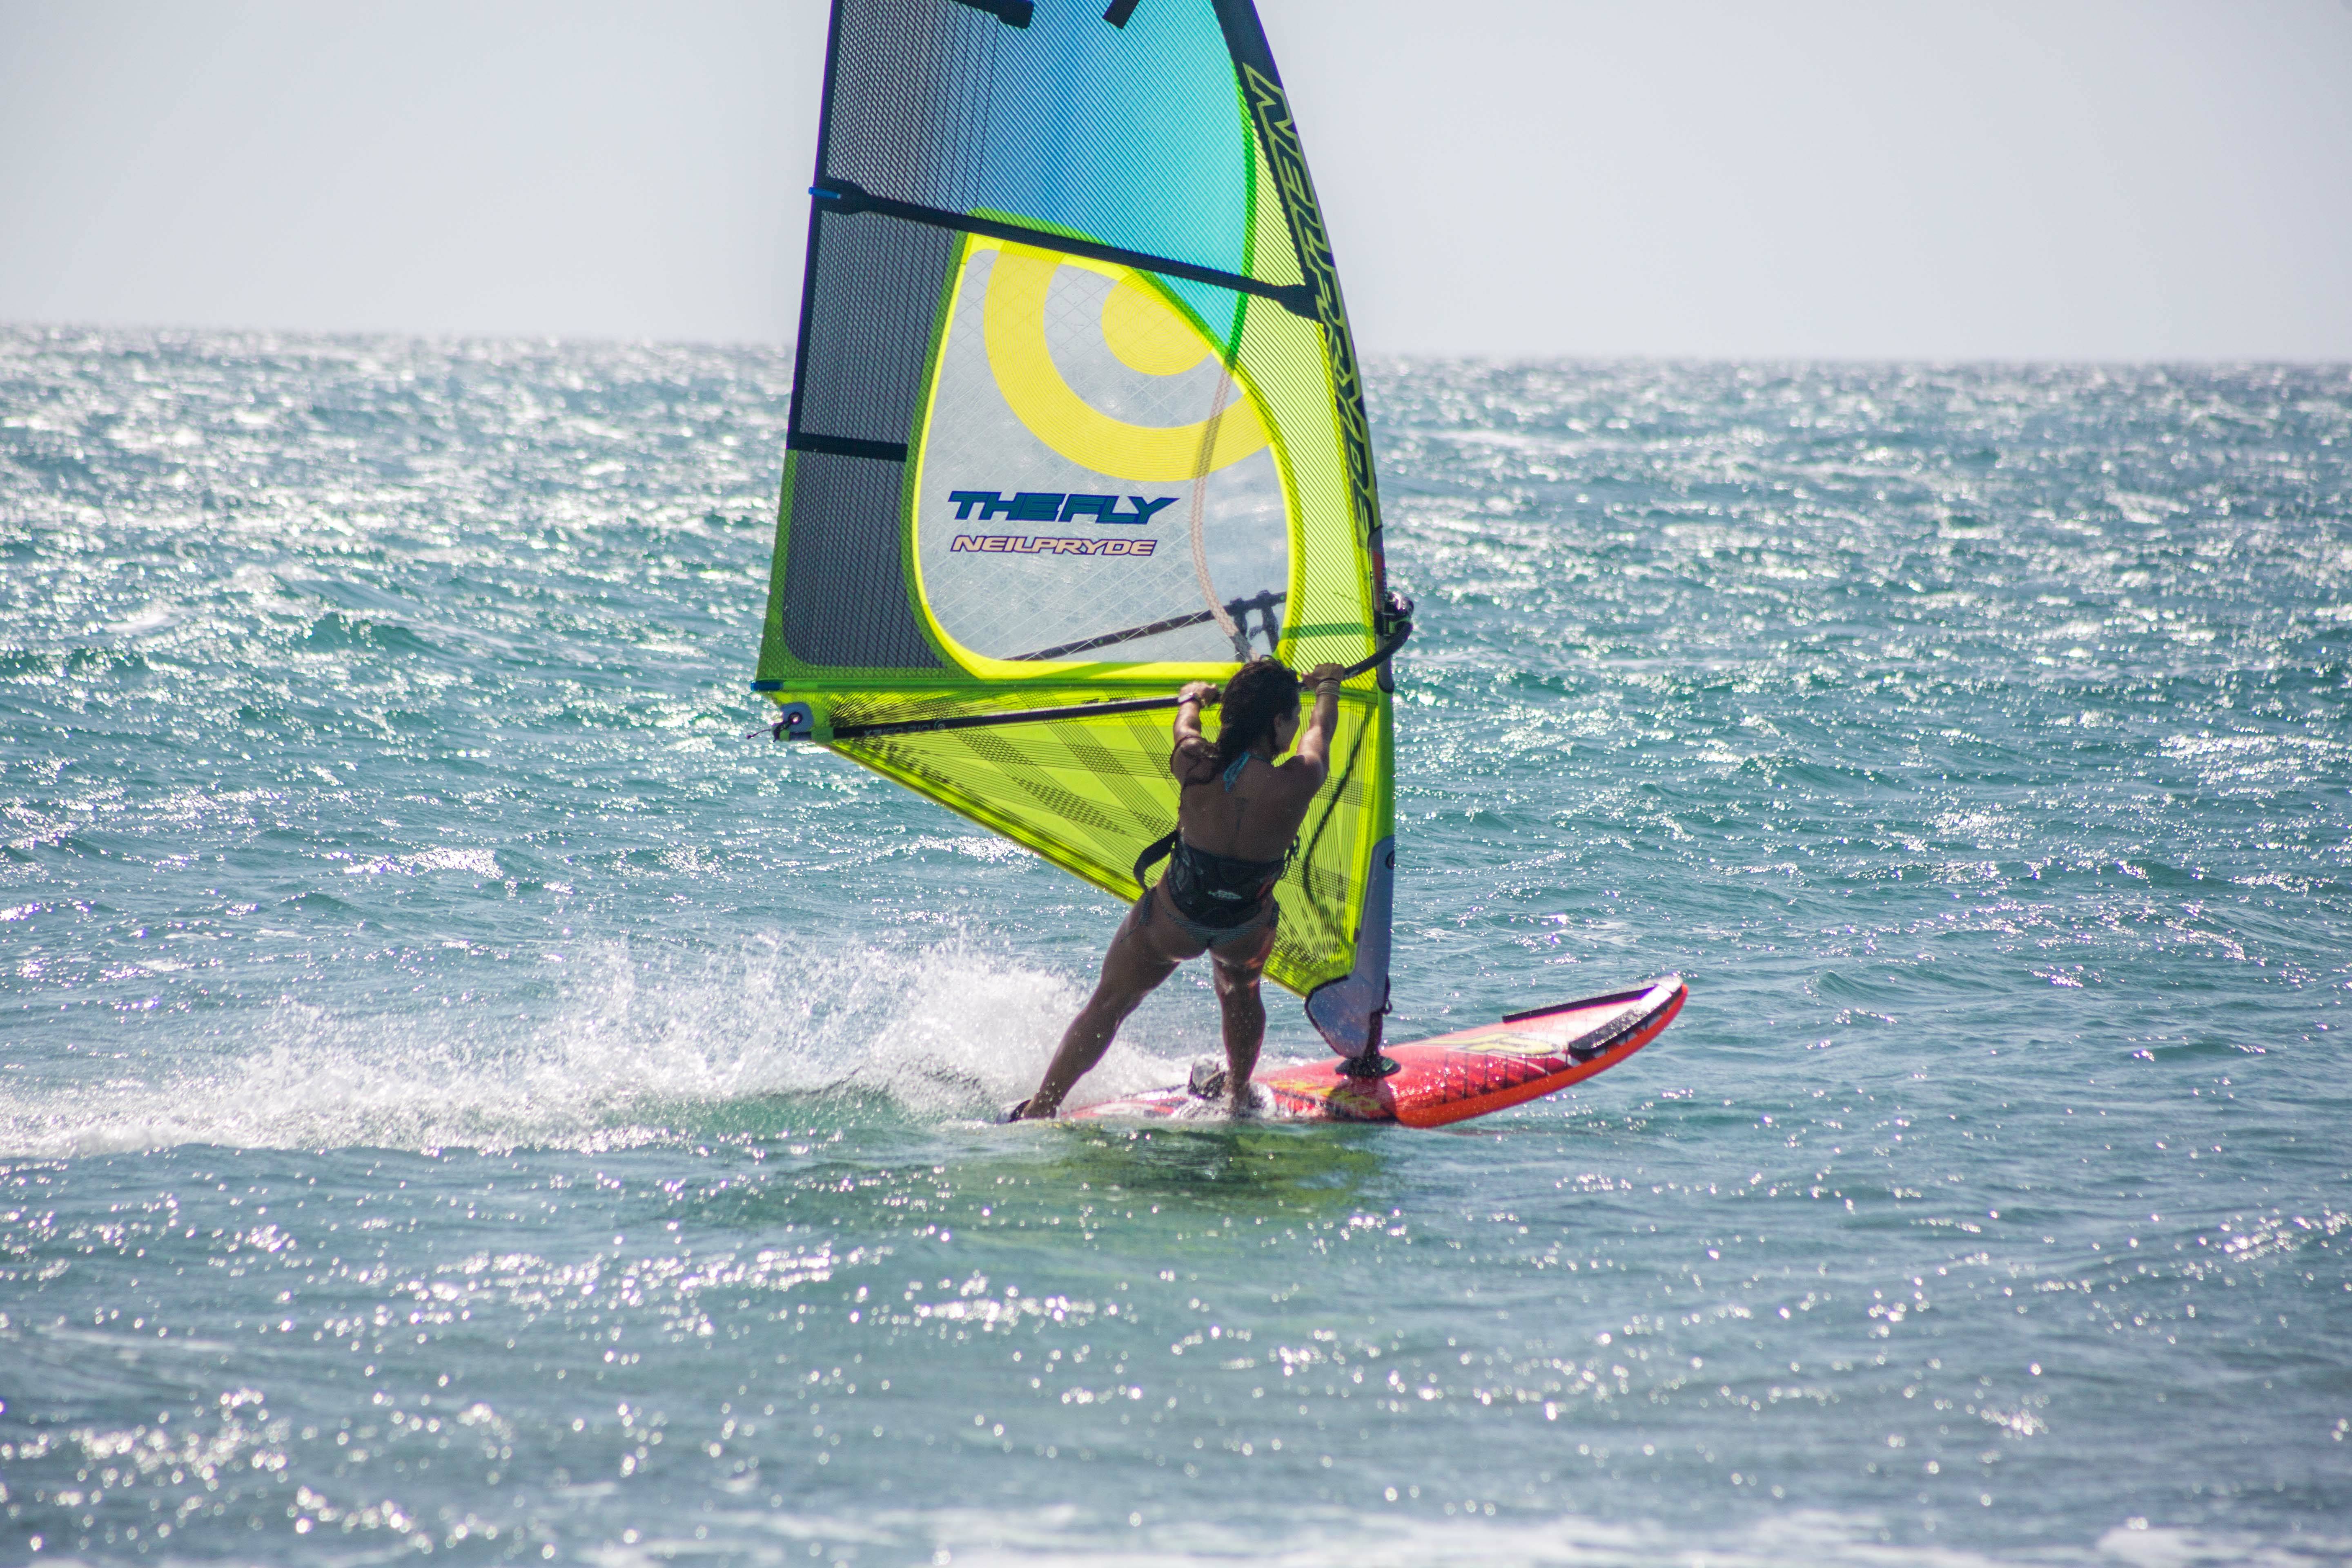 jeri-windsurf-jpg.jpg